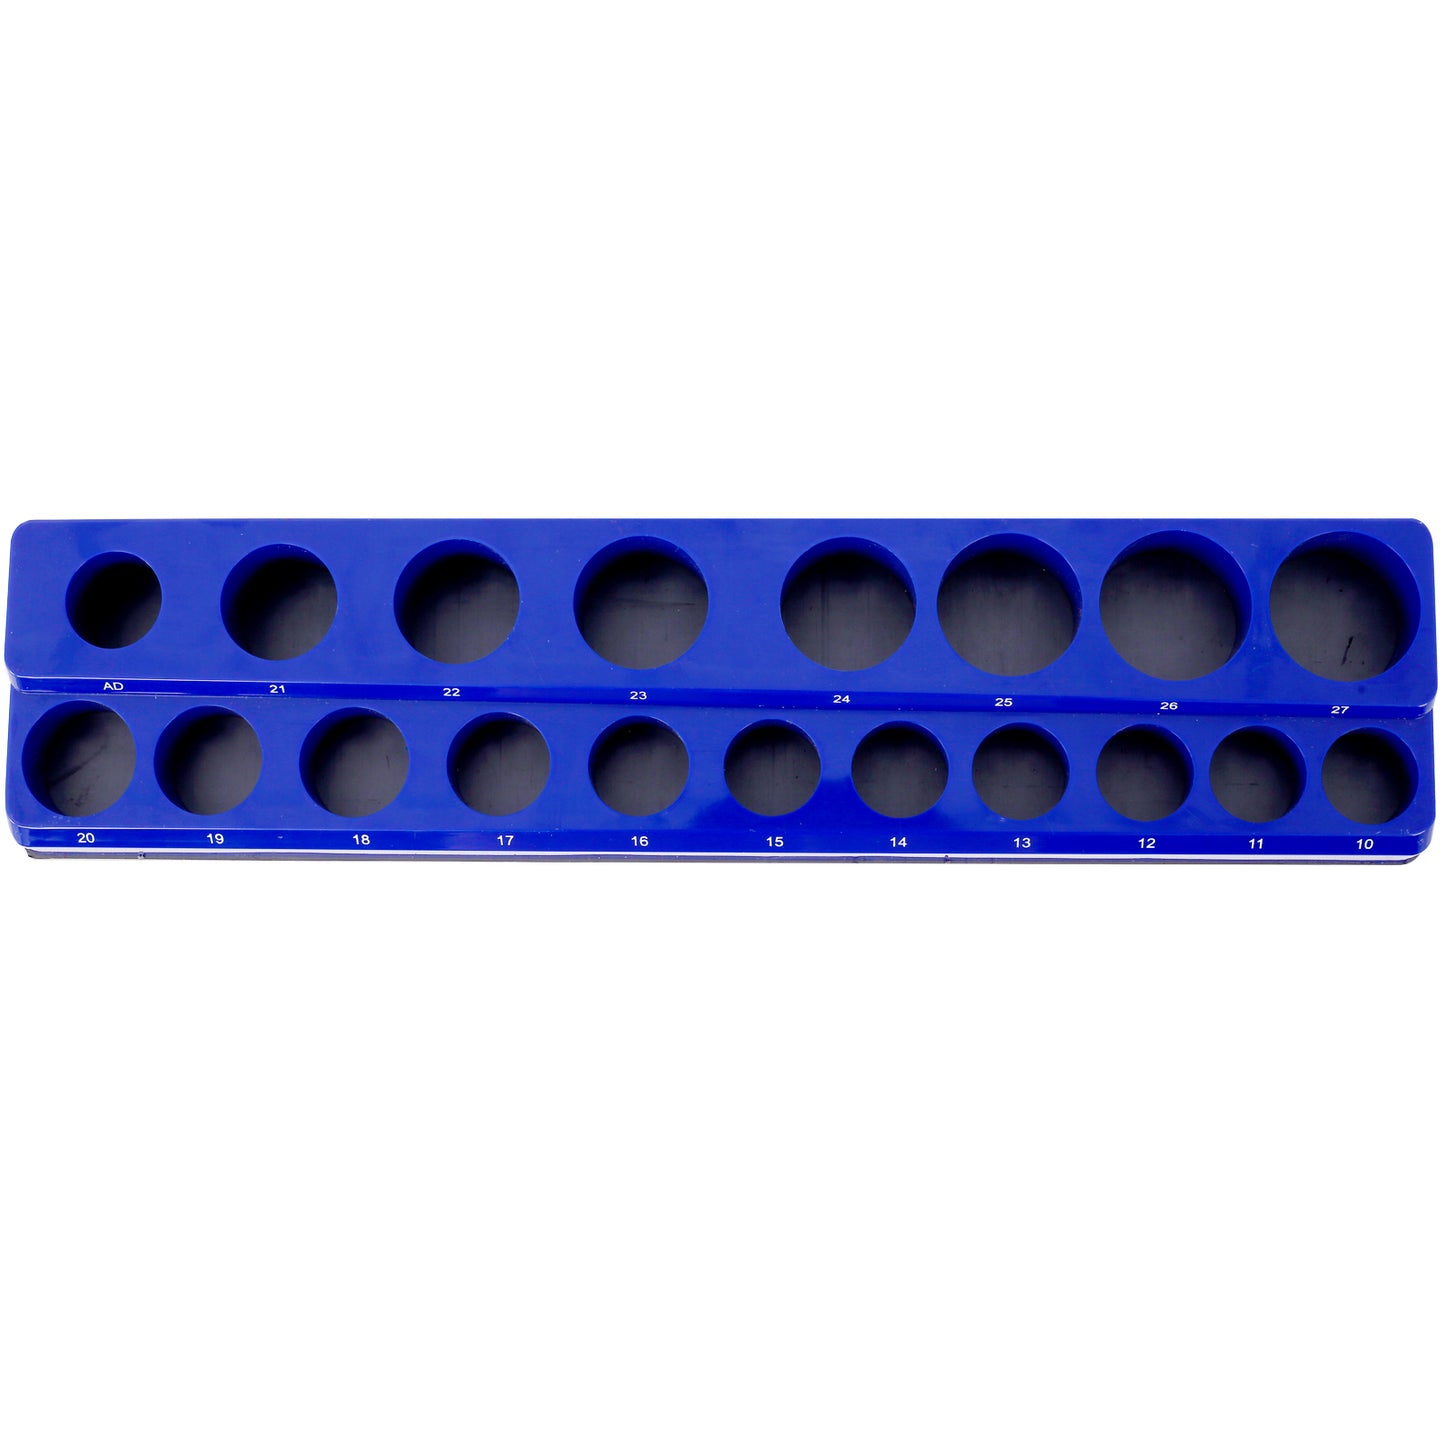 3 Piece metric Magnetic Socket Organizers, Socket Organizers for Toolboxes, Socket Organizer, Magnetic Socket Holder, Black Tool Box Organizer.3set,blue,Metric